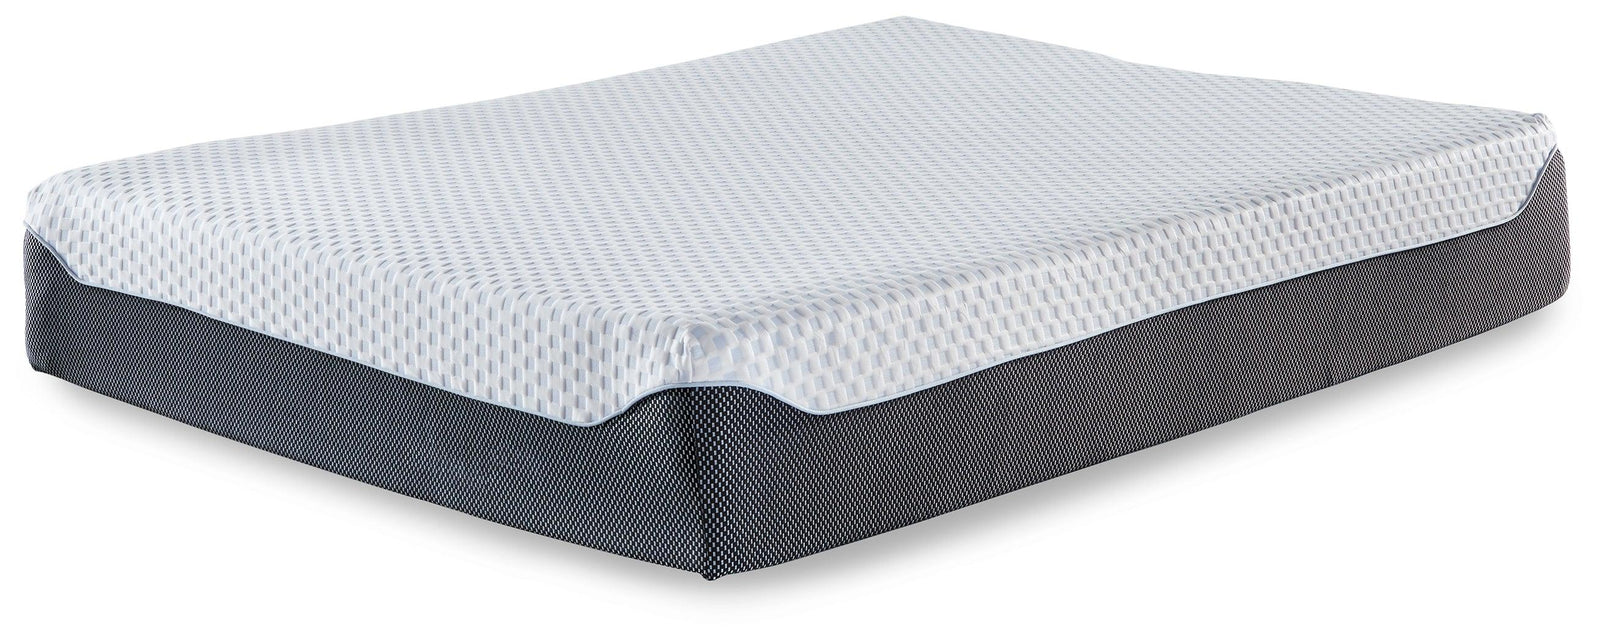 12 Inch Chime Elite White/Gray Full Memory Foam Mattress In A Box